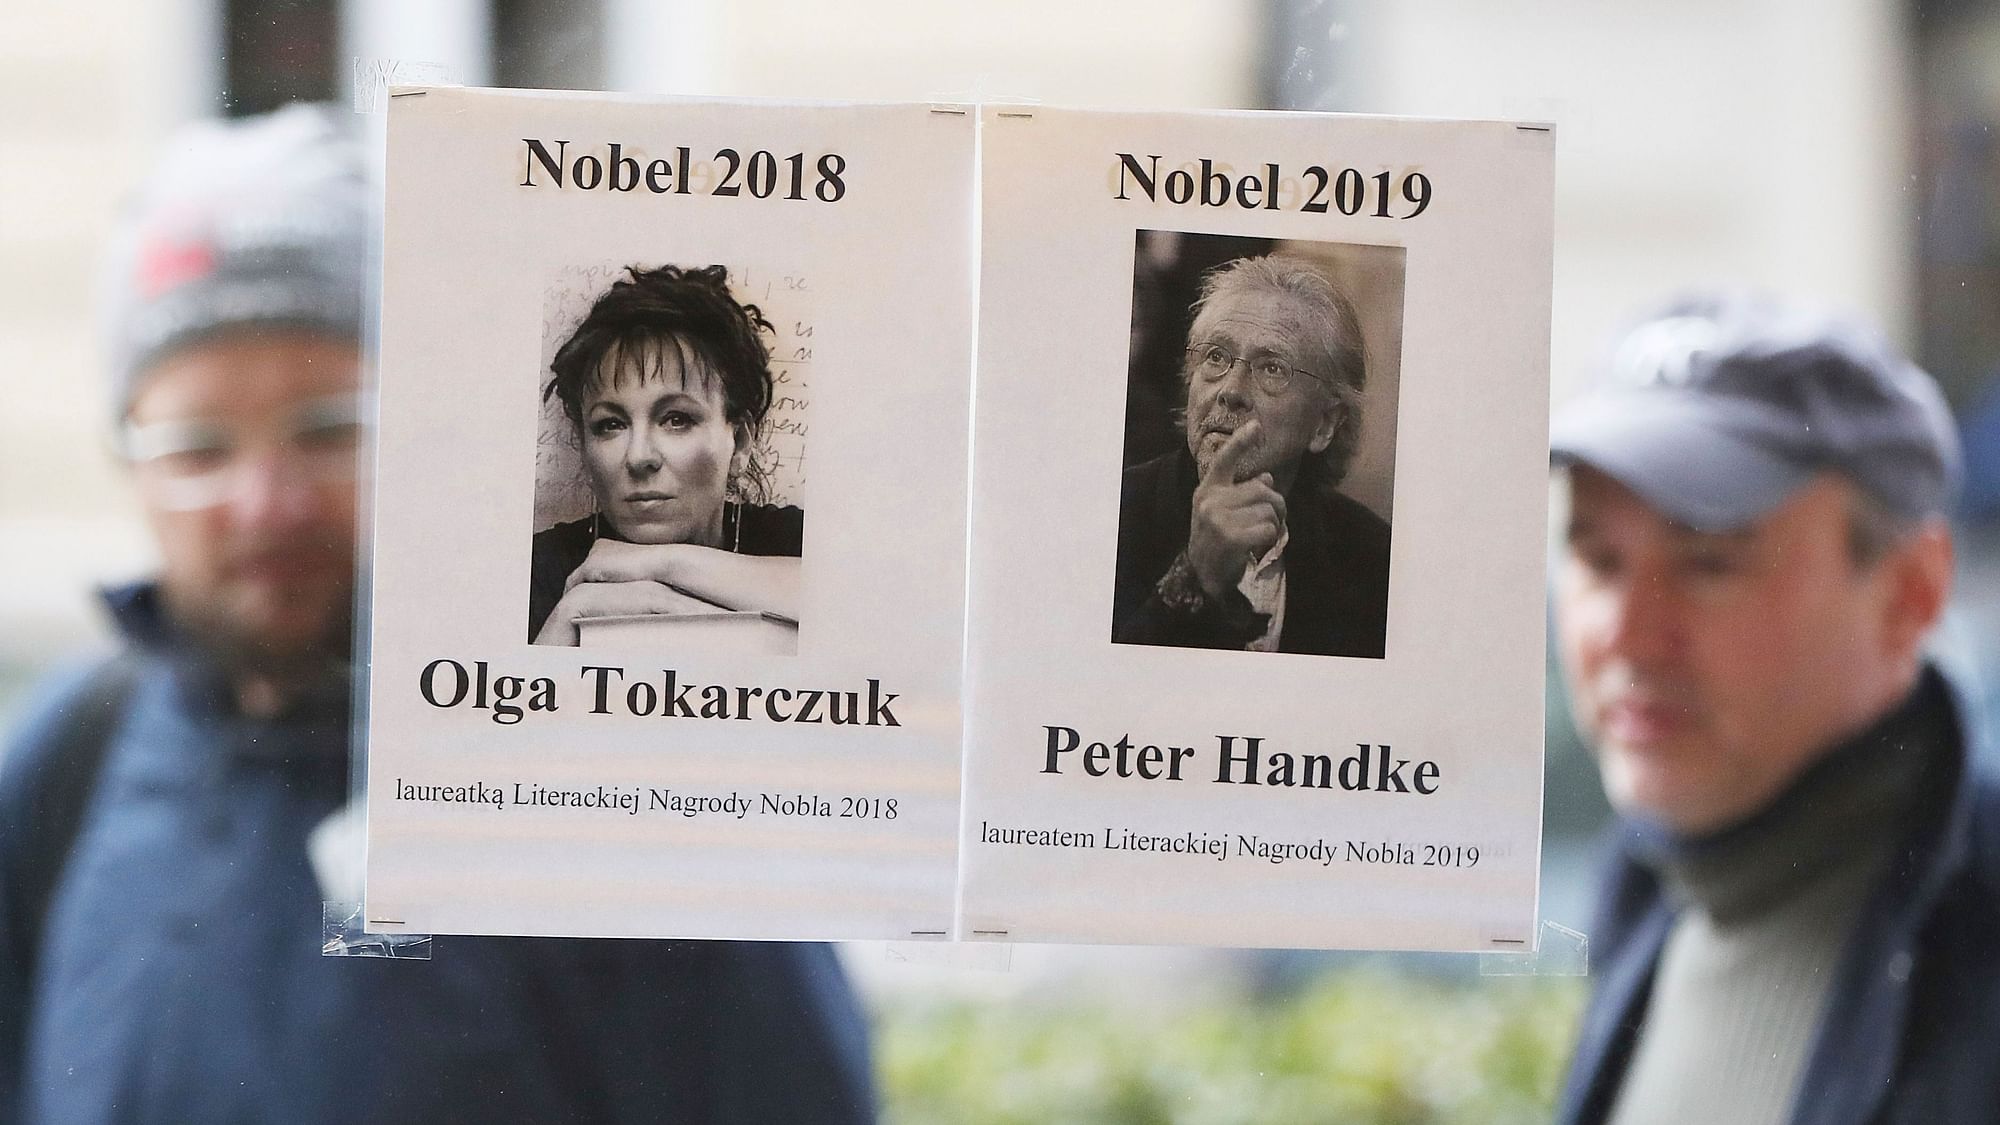 Polish author Olga Tokarczuk and Austrian author Peter Handke won the 2018 and 2019 Nobel Prizes for literature.